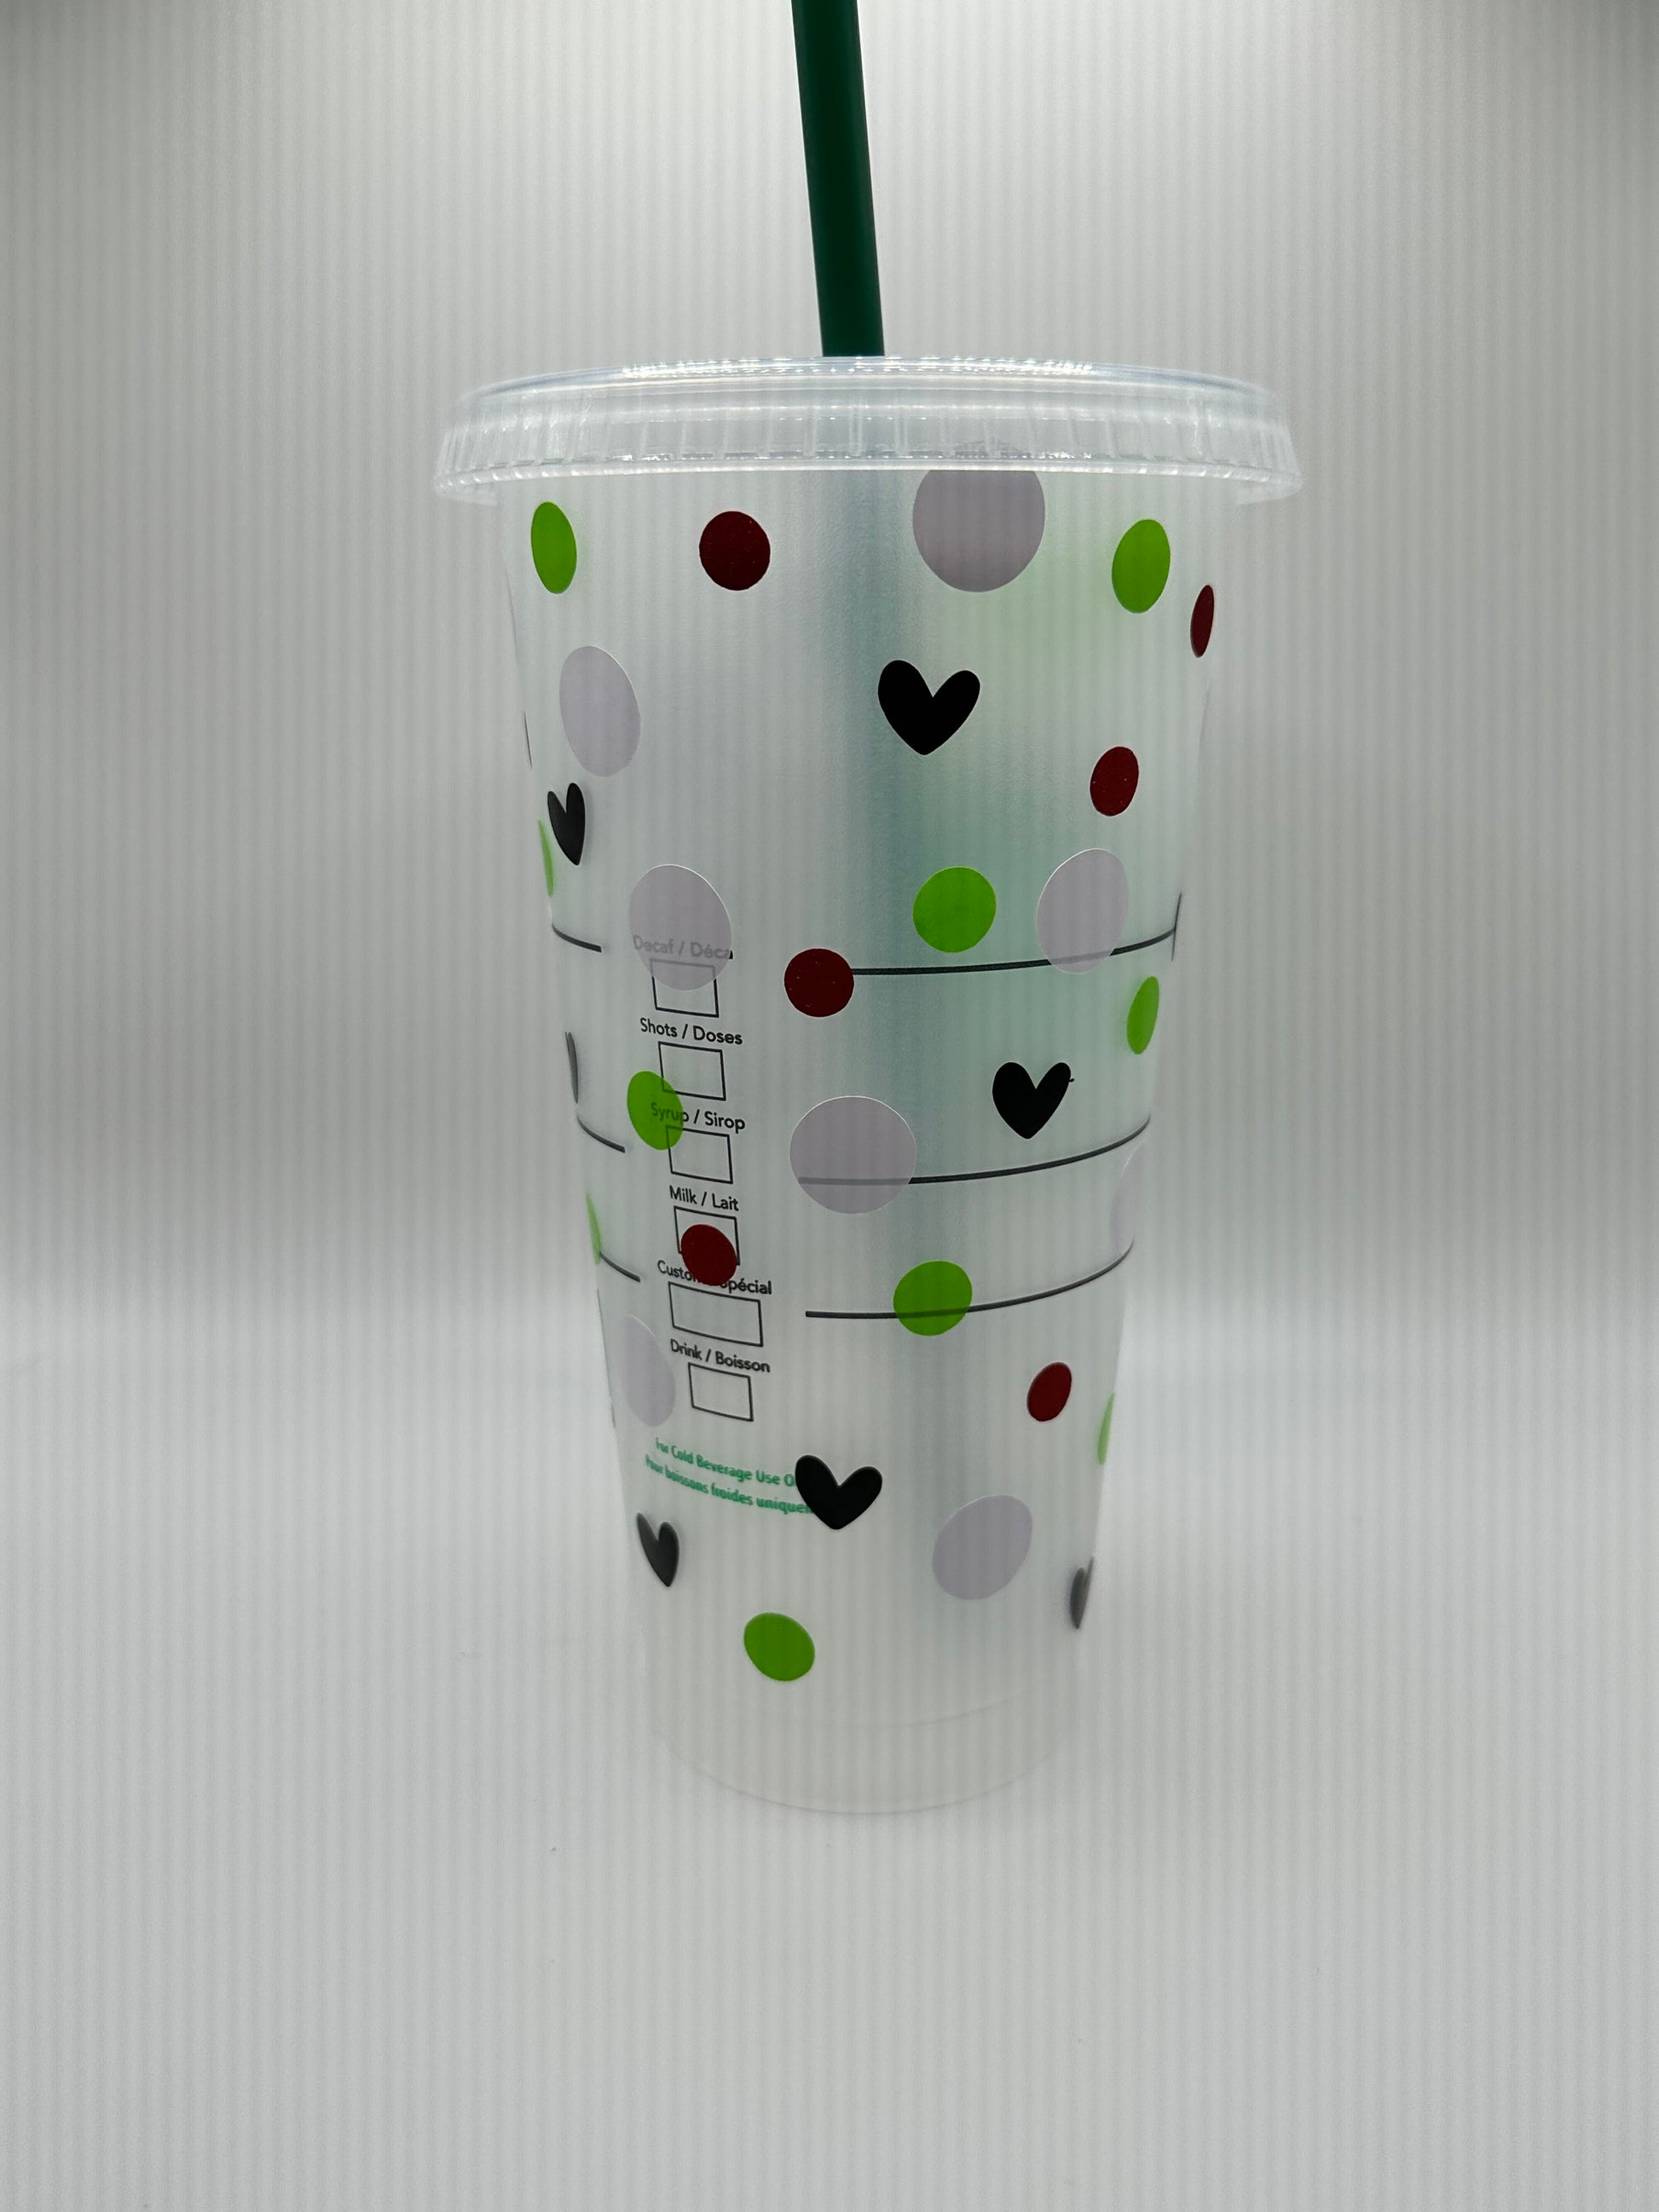 Grinch starbucks cups – Fourfold Apparel & Designs